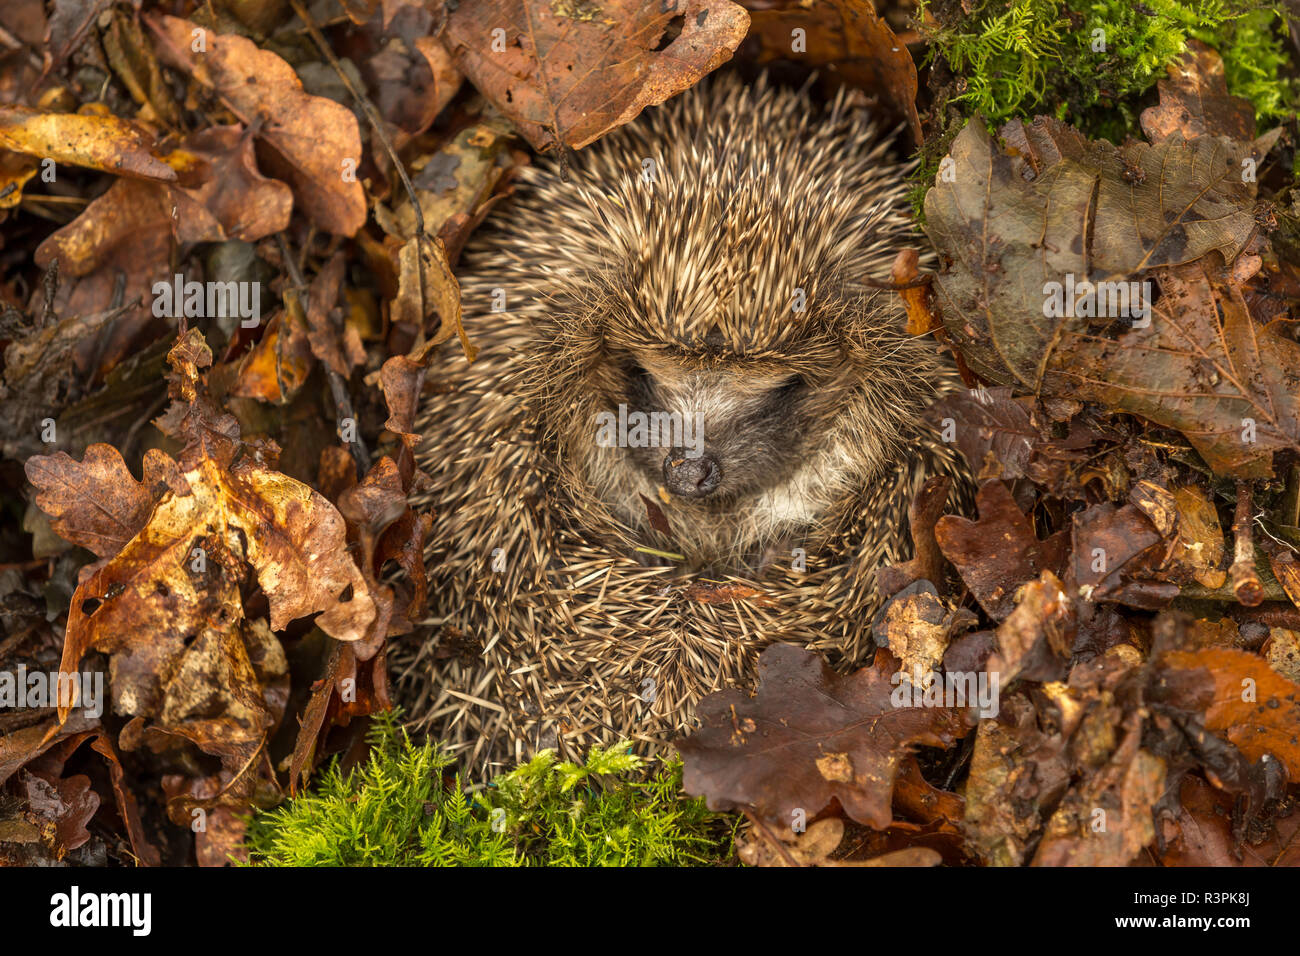 Hedgehog, wild, native, European hedgehog in natural woodland habitat and hibernating in golden brown Autumn or fall leaves. Erinaceus Europaeus. Stock Photo